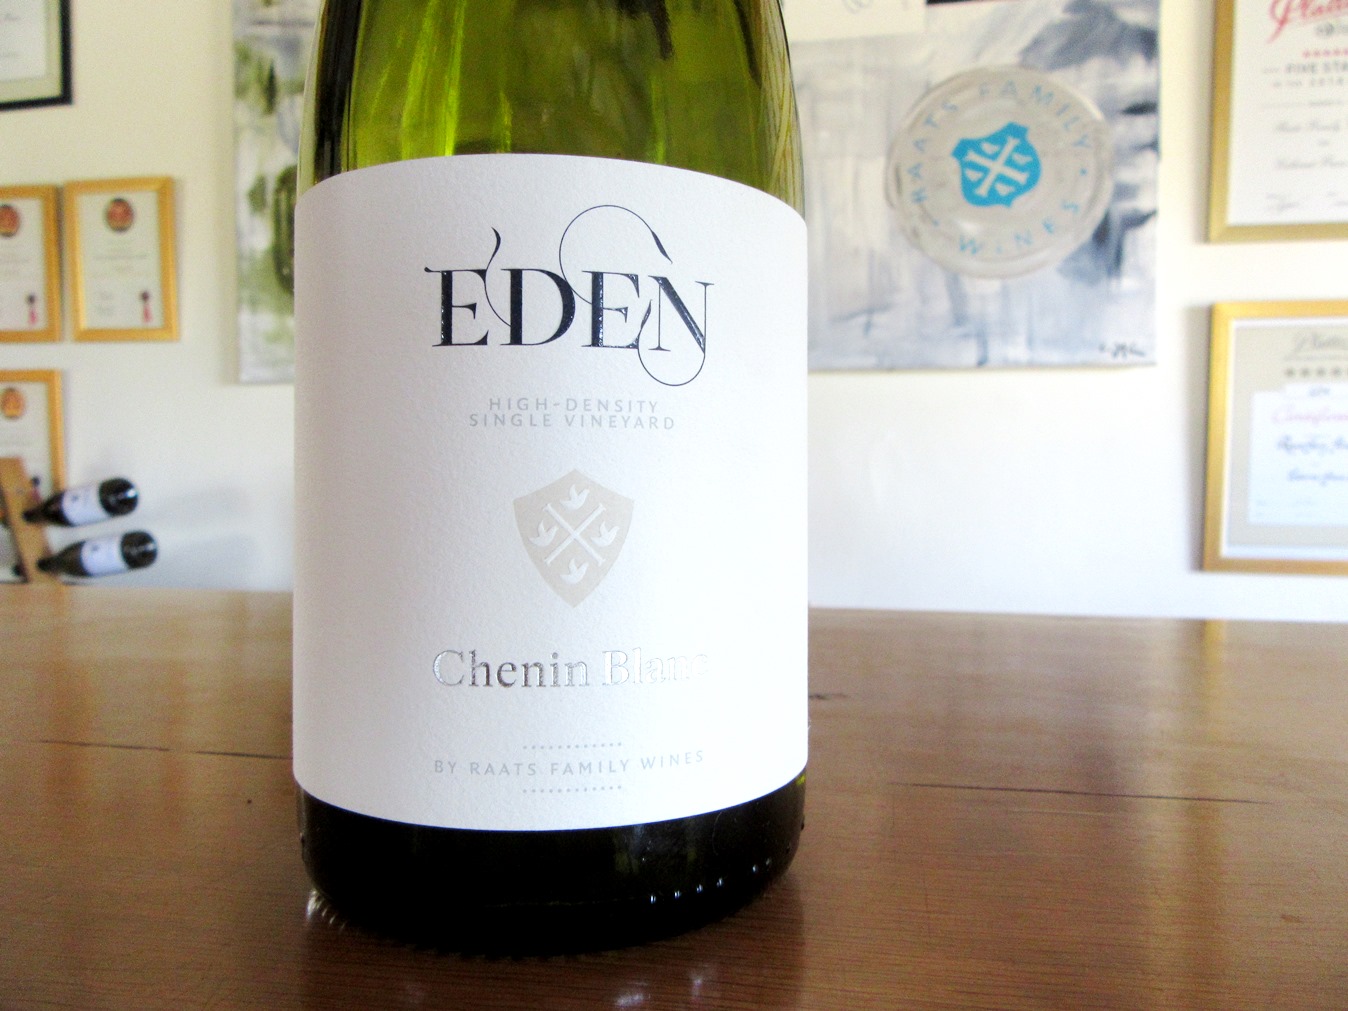 Raats Family Wines, Eden High Density Single Vineyard Chenin Blanc 2015, Stellenbosch, South Africa, Wine Casual